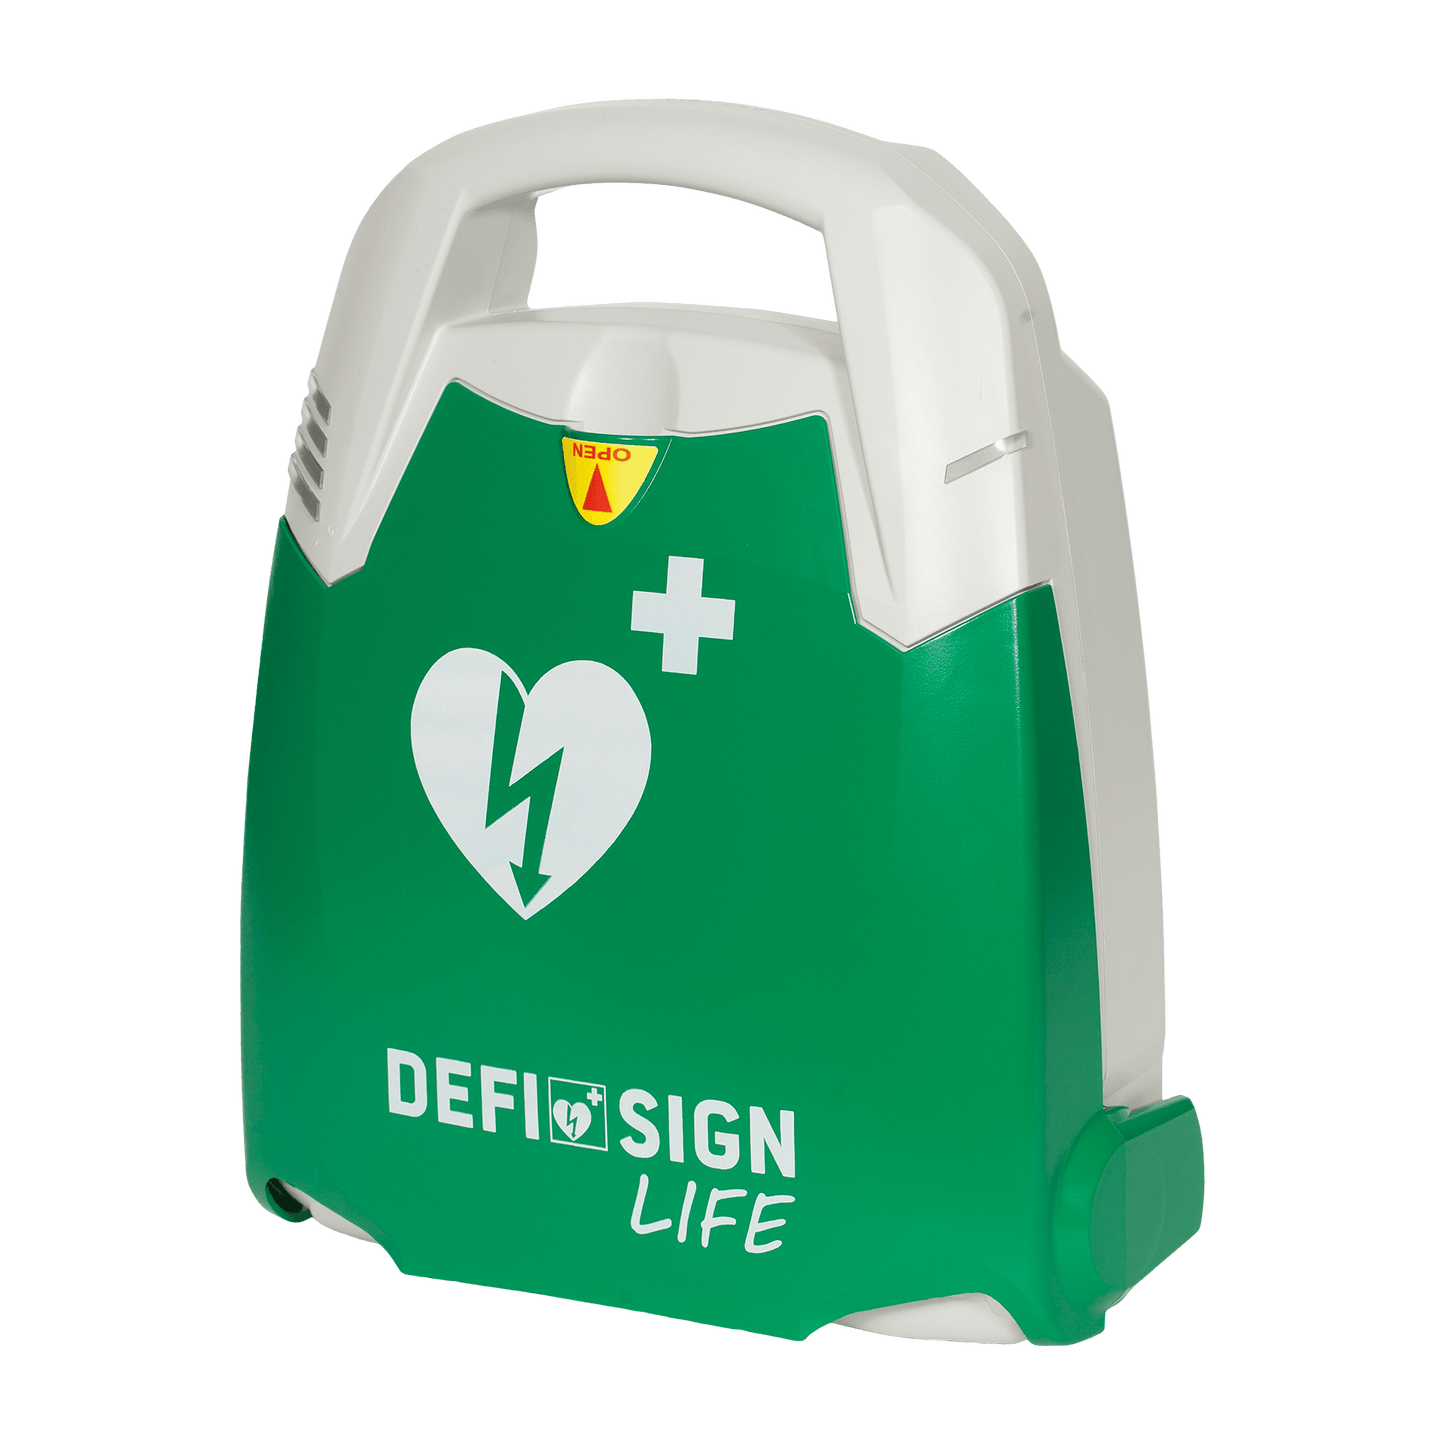 DefiSign AED